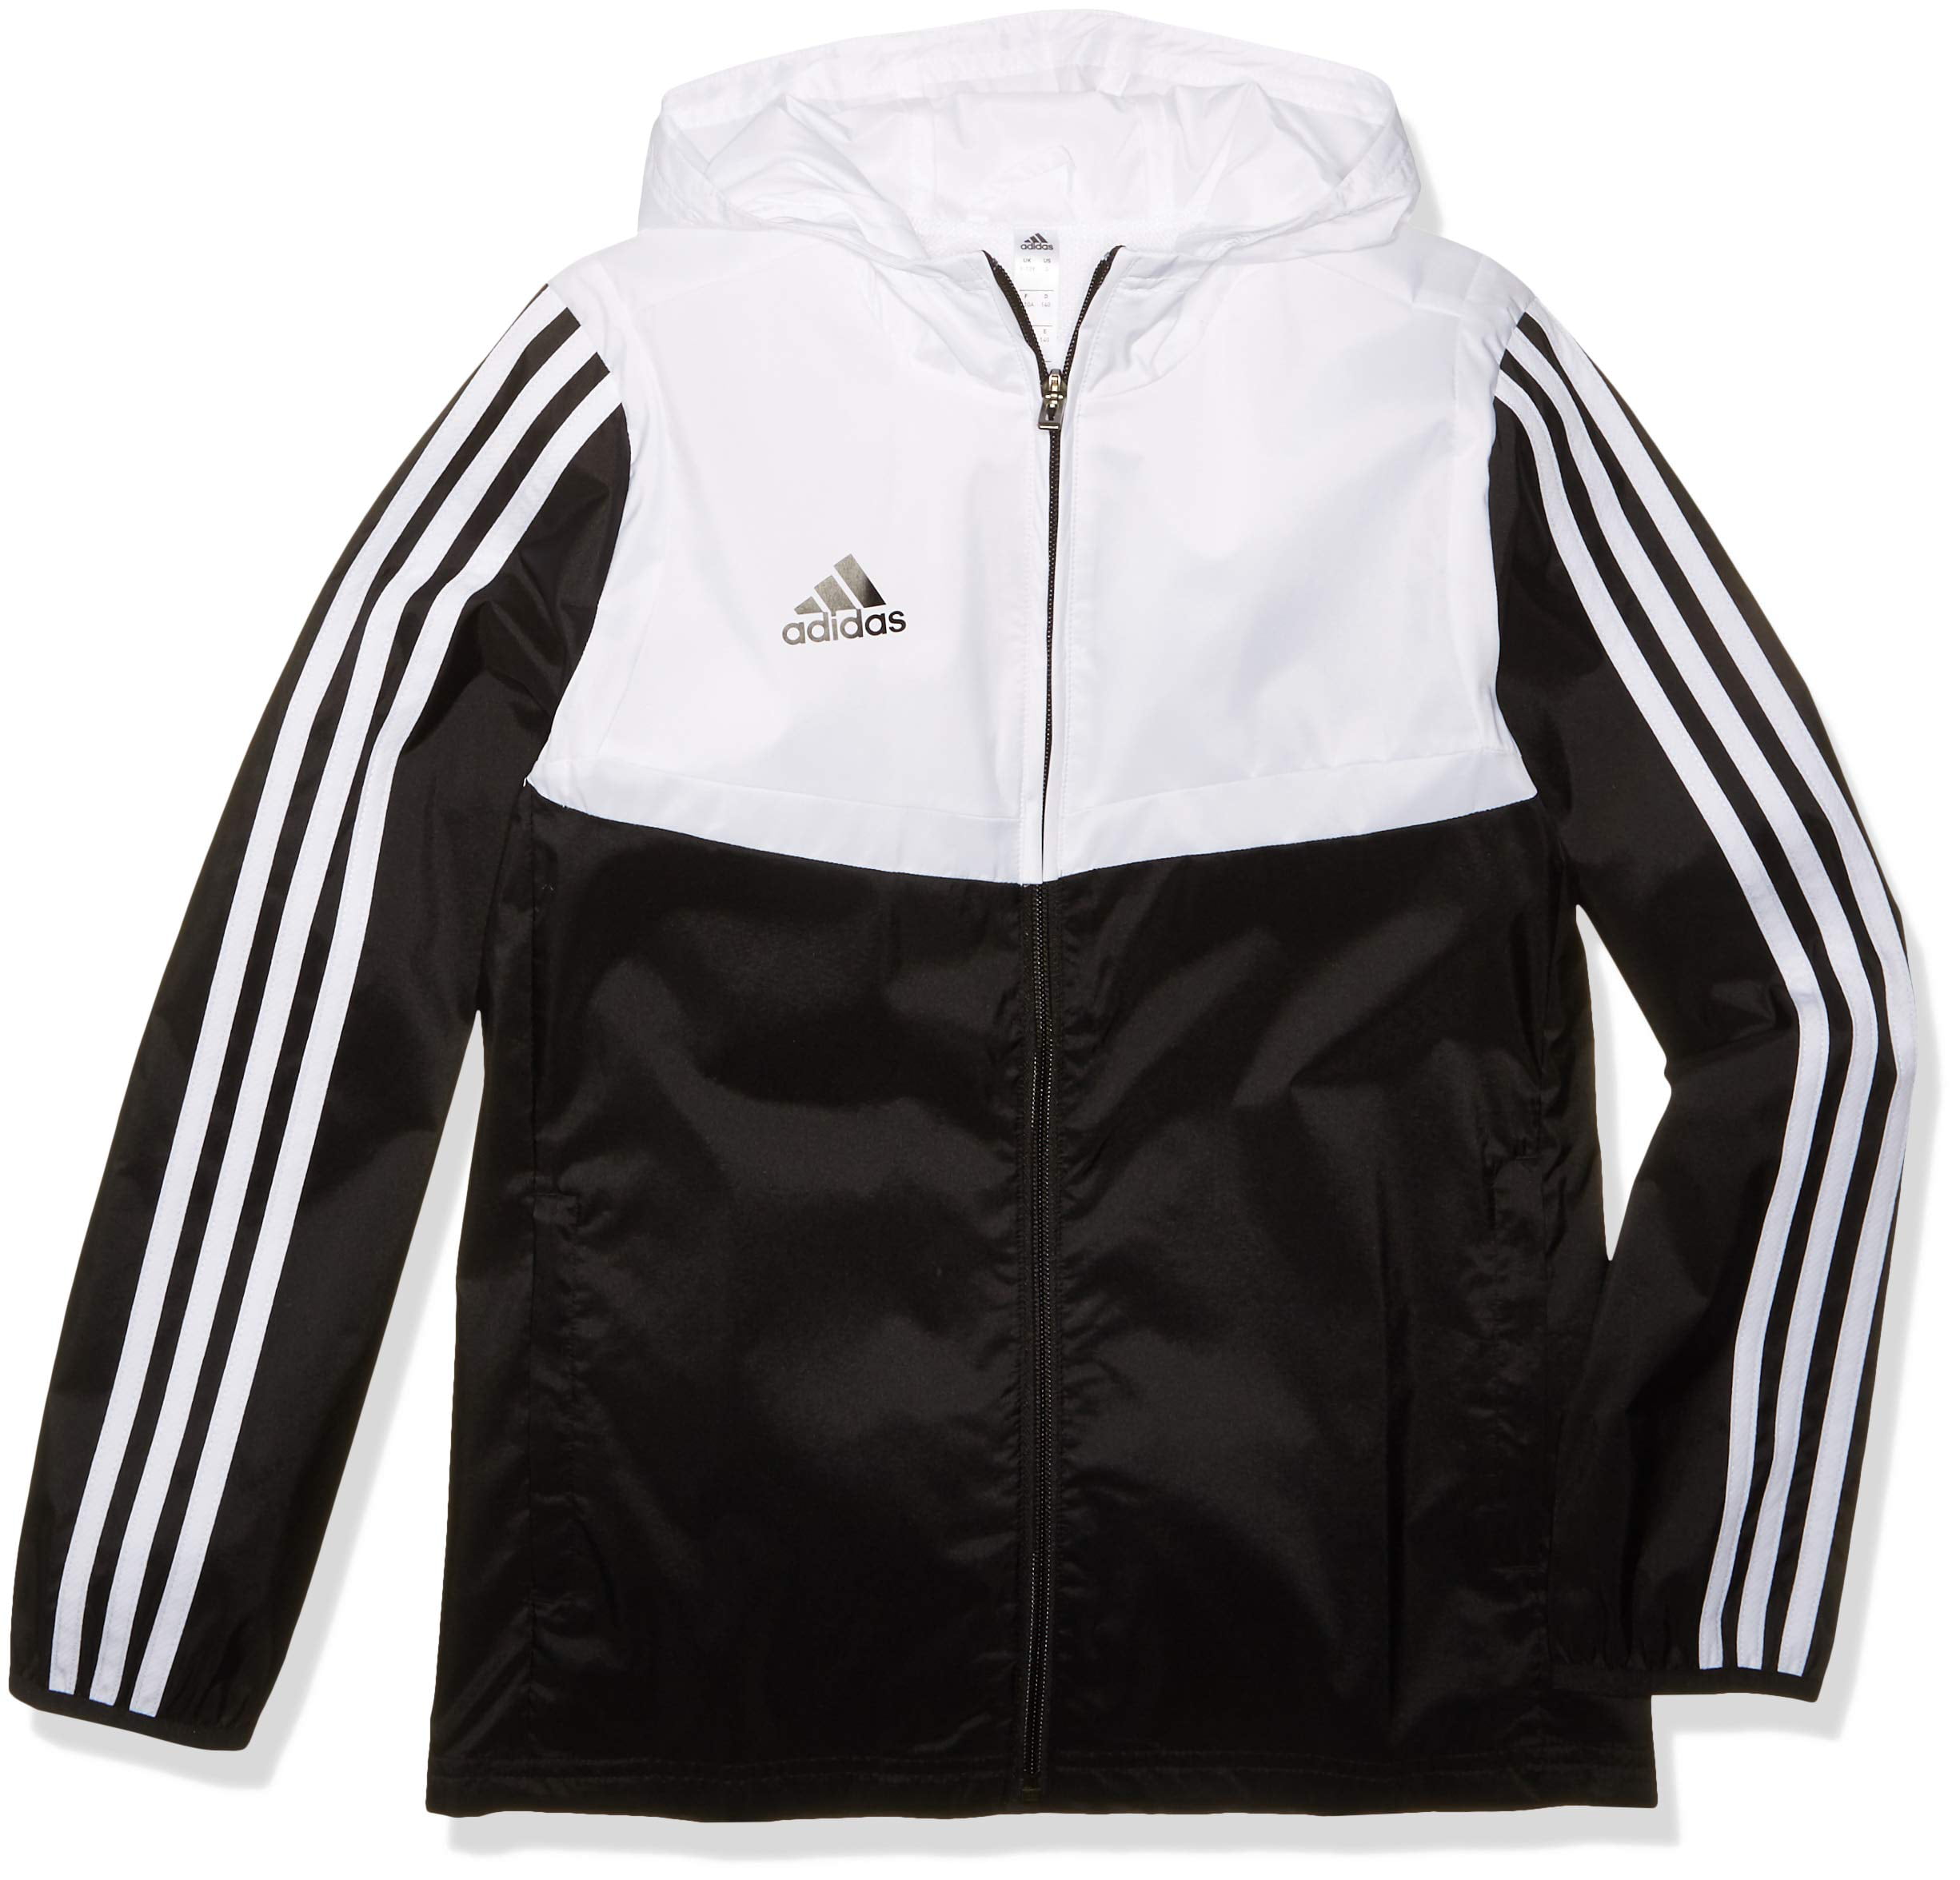 Adidas Outerwear - Boys' Jacket White Large Alphaskin Tiro Windbreaker ...